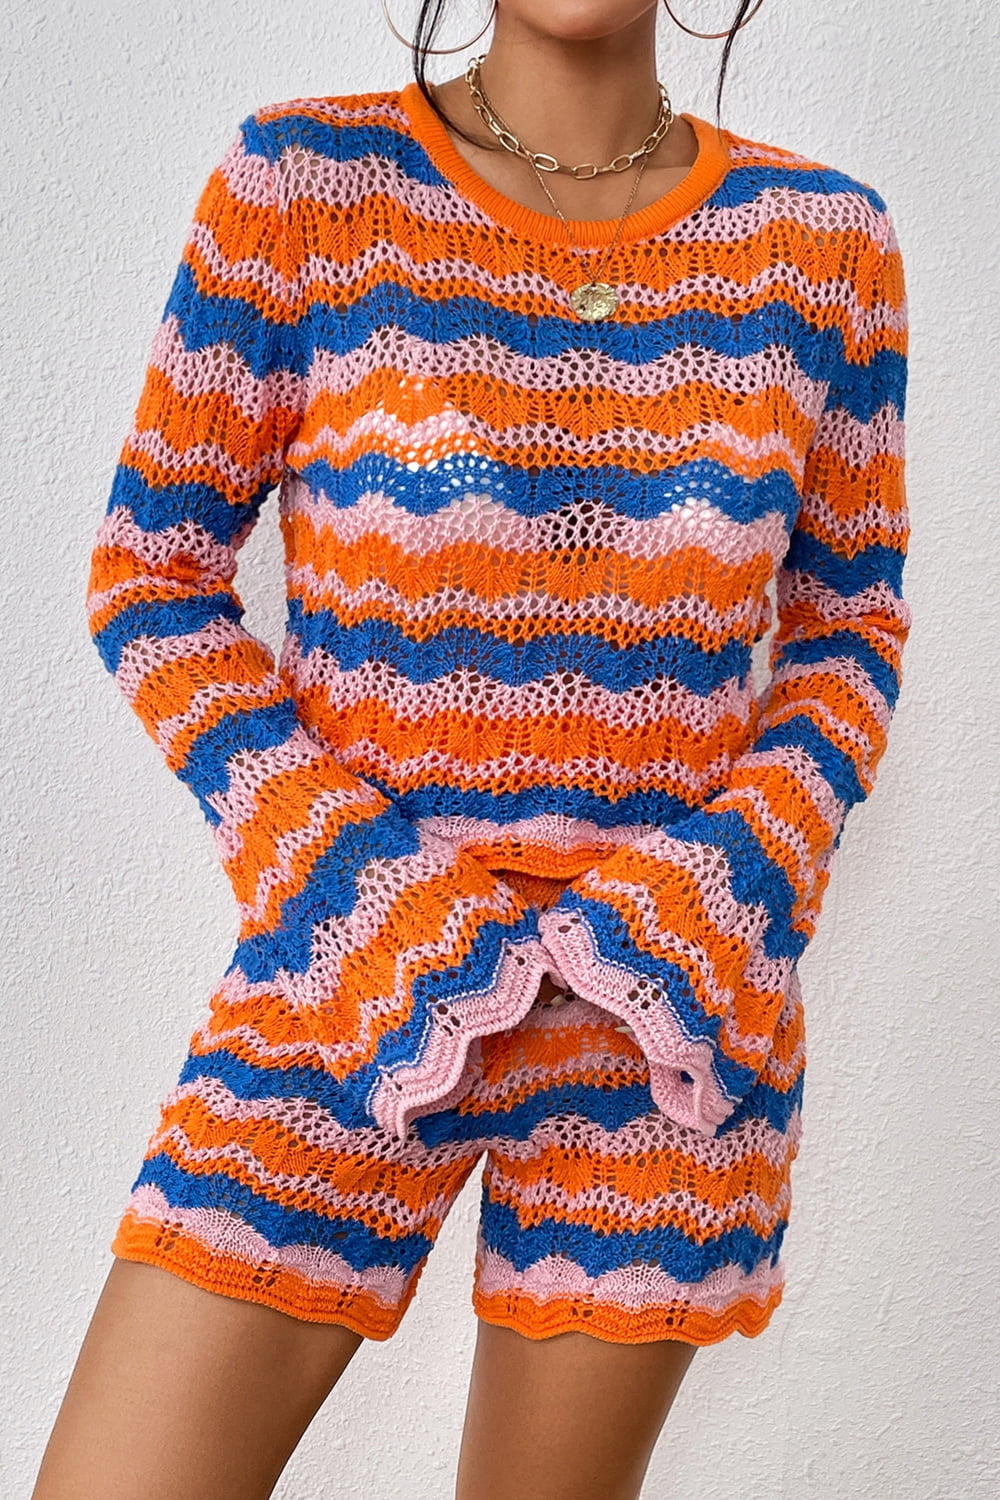 Fashionista Striped Sweater and Knit Shorts Set